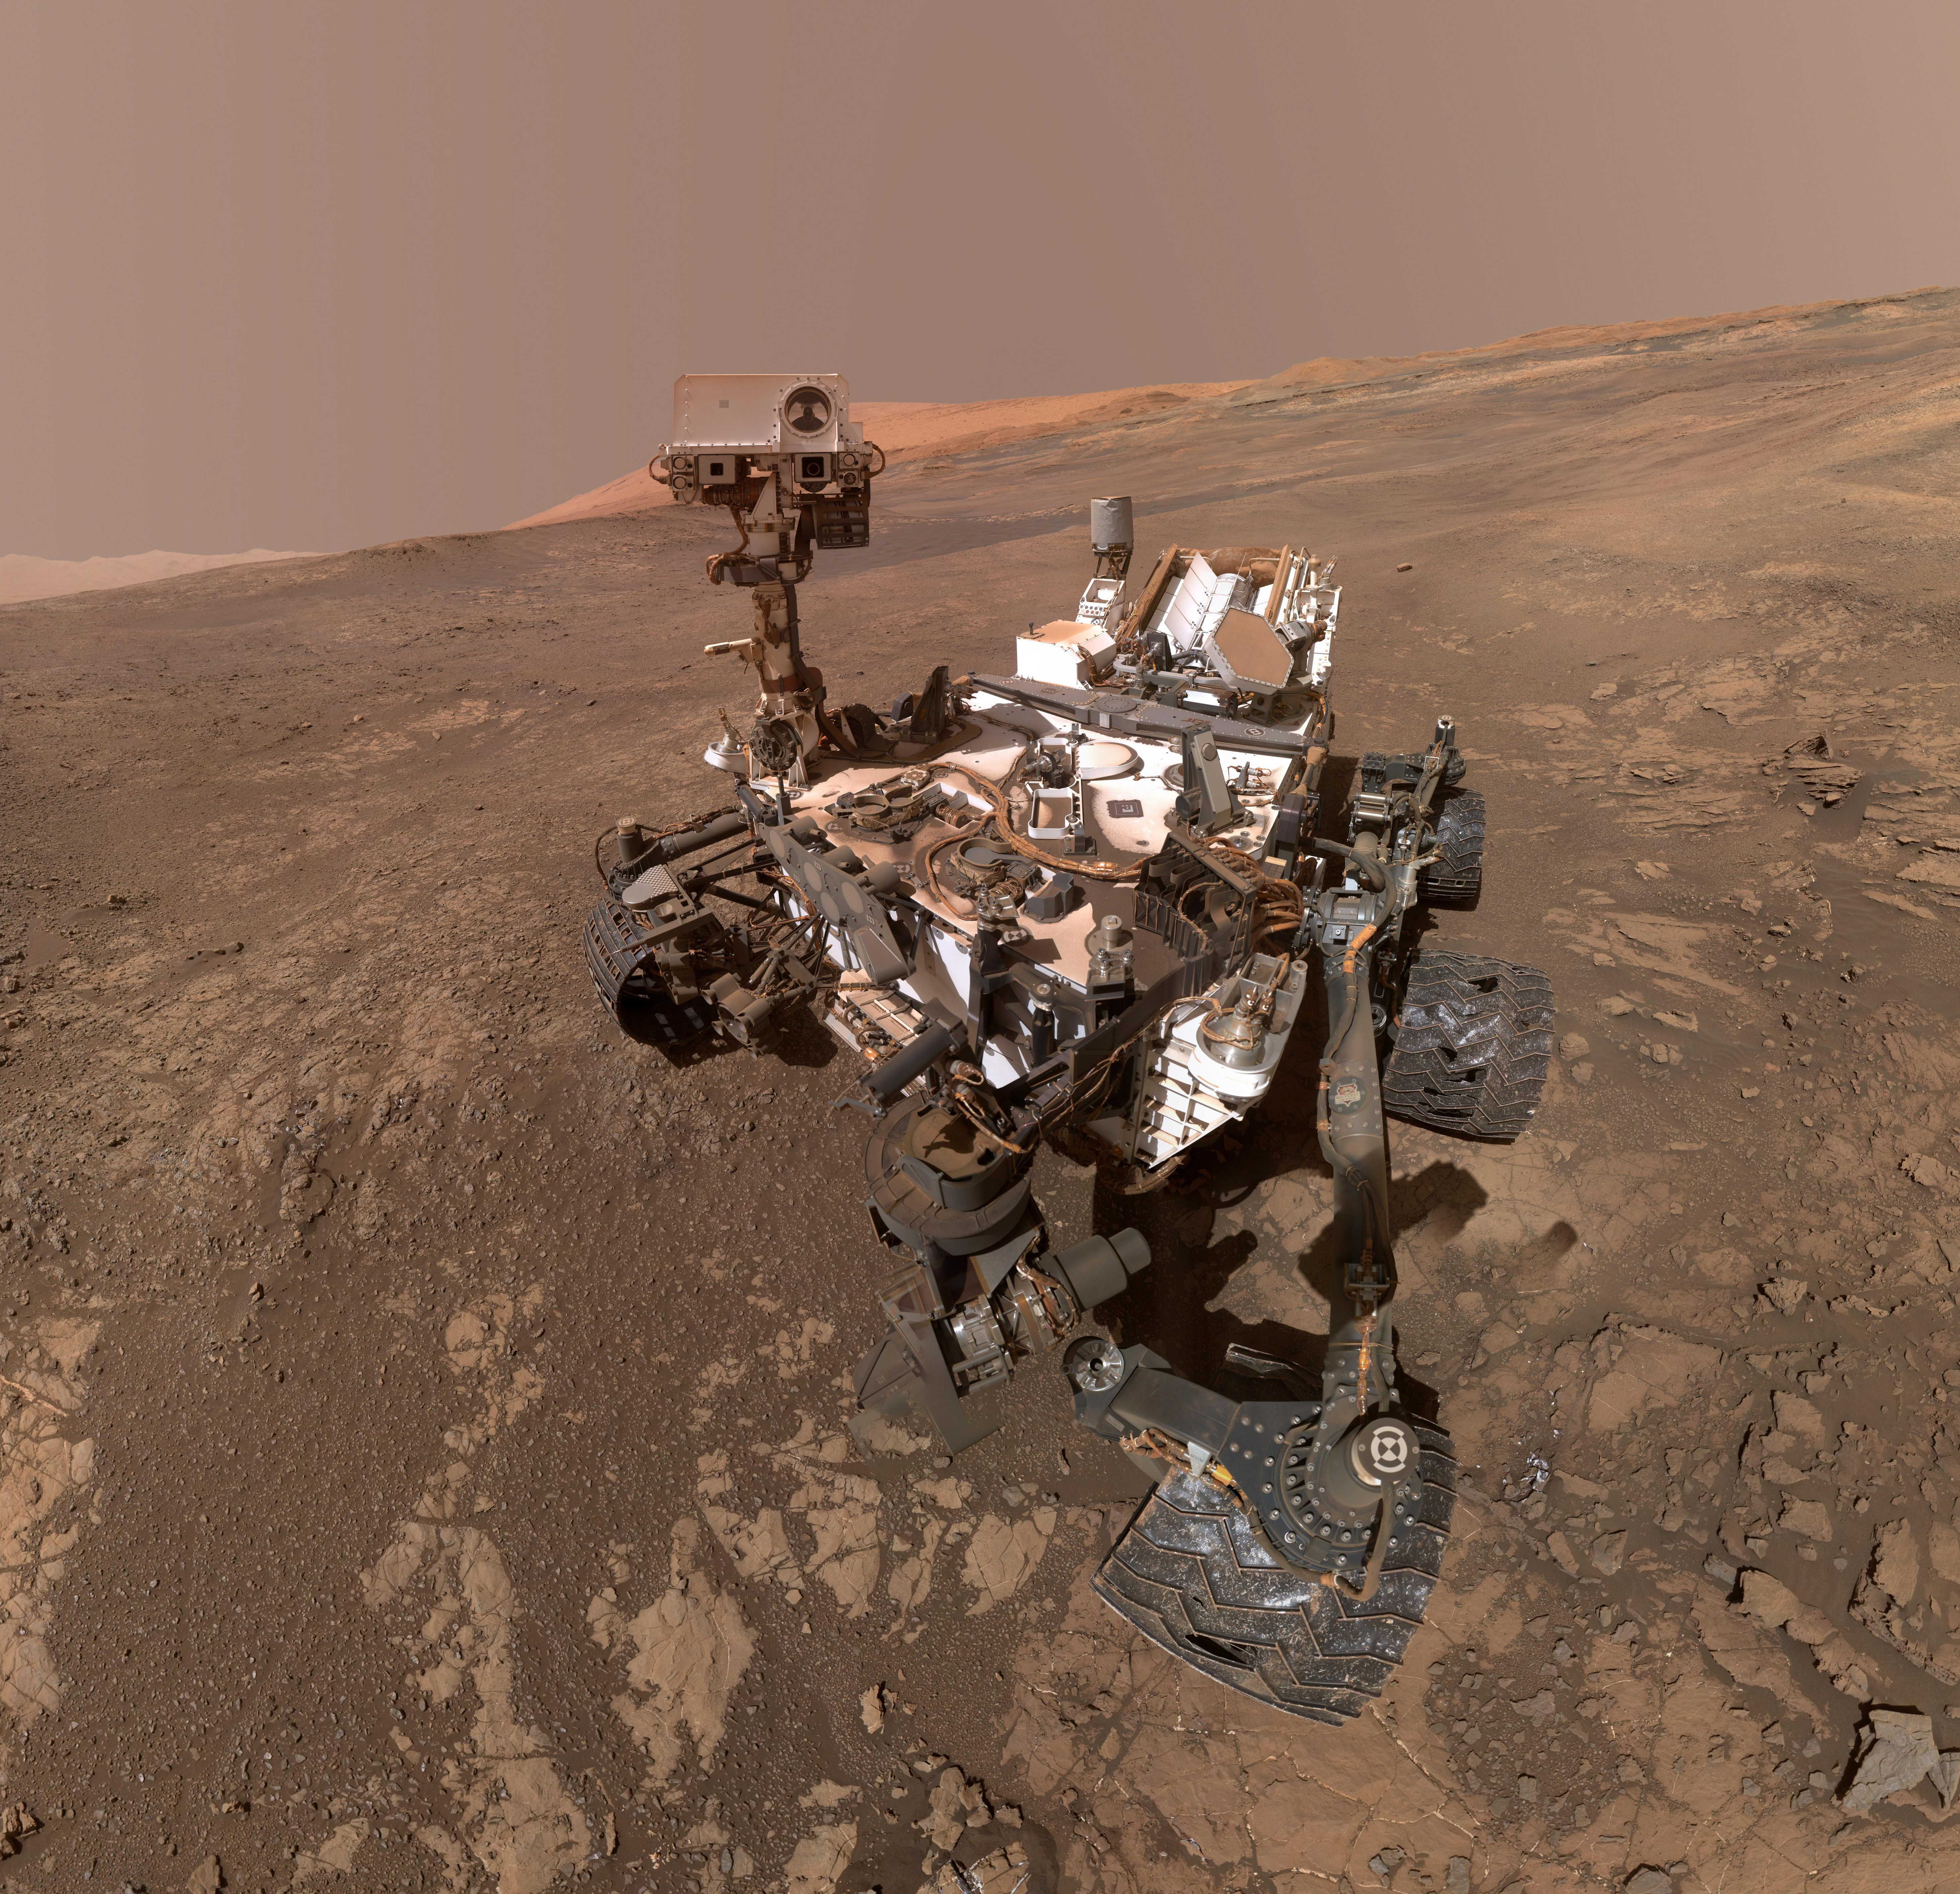 Self-portrait of NASA's Curiosity Mars rover on Vera Rubin Ridge with Mount Sharp poking up just behind the vehicle's mast. Image is courtesy of NASA/JPL-Caltech/MSSS Curiosity.